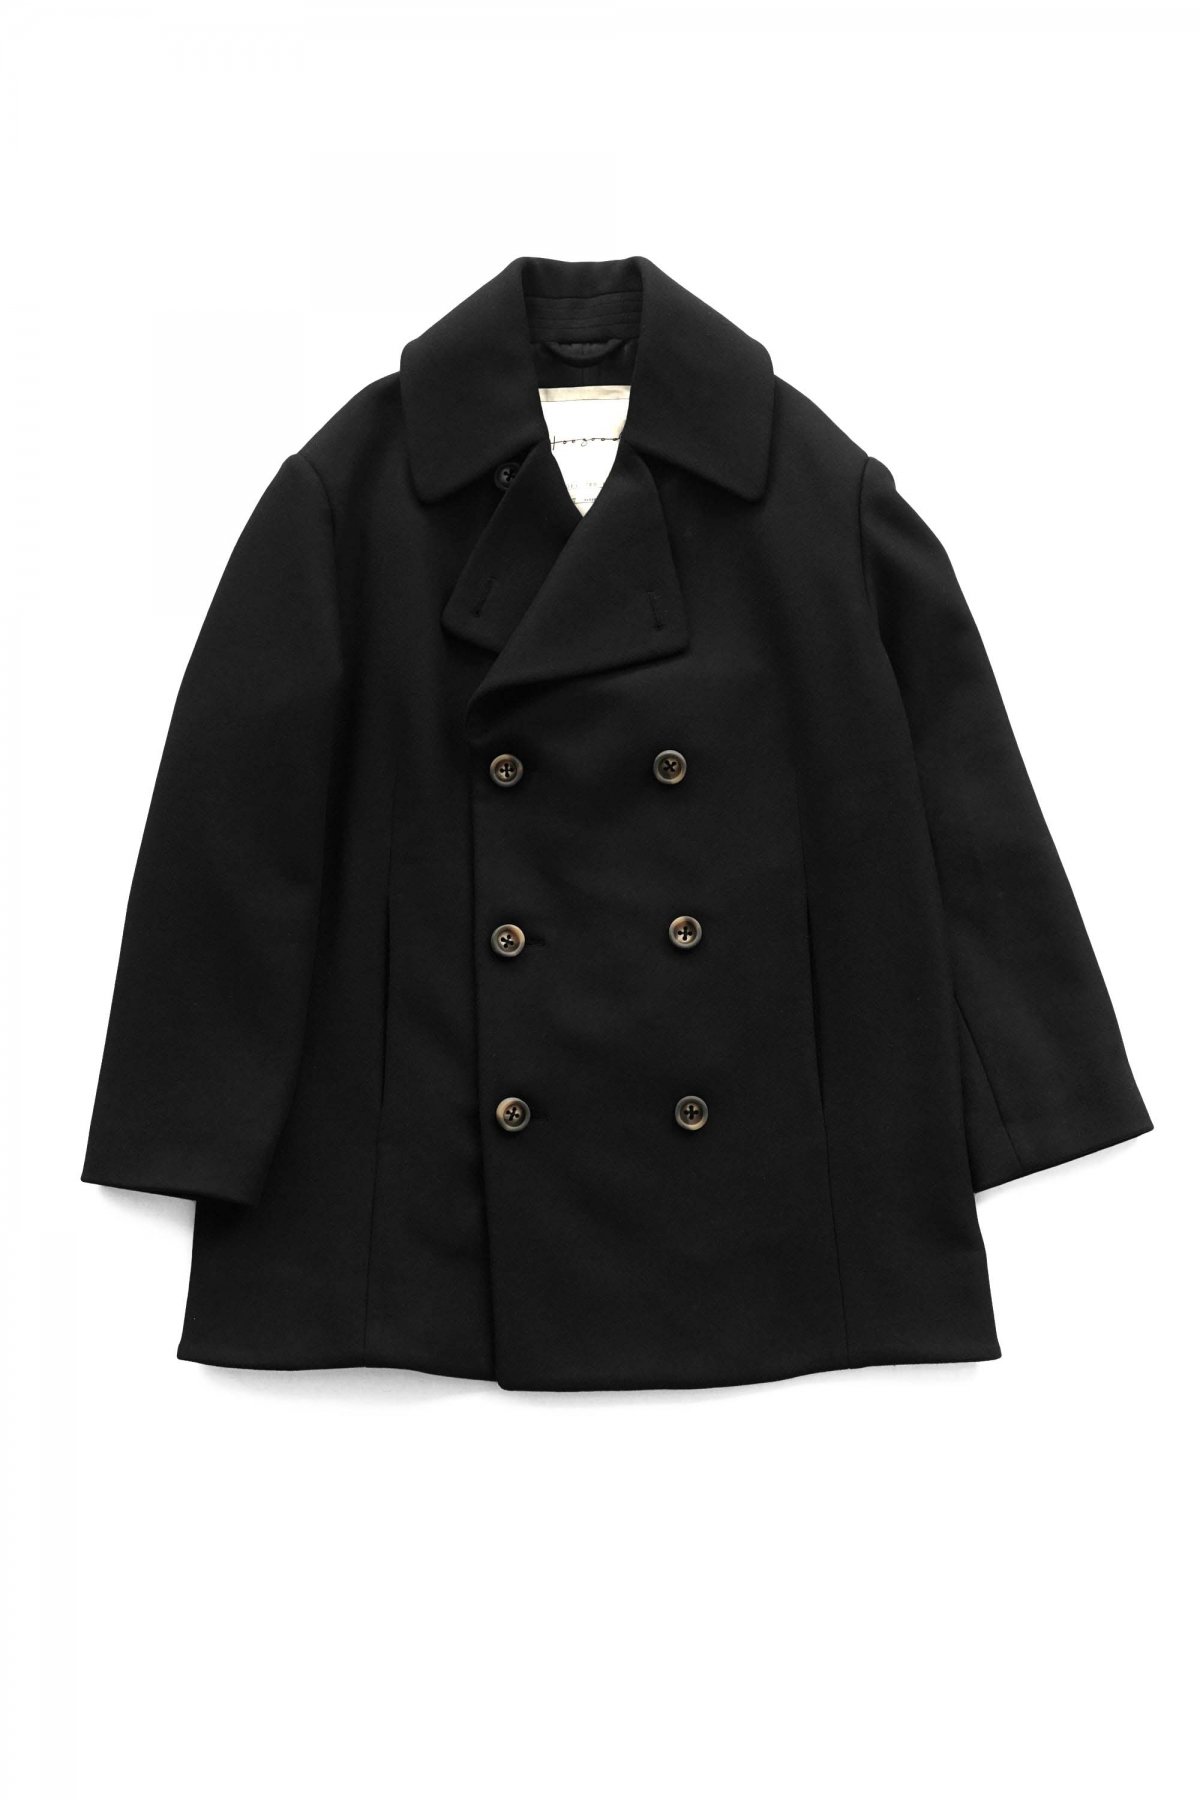 toogood officer coat (pea coat)-